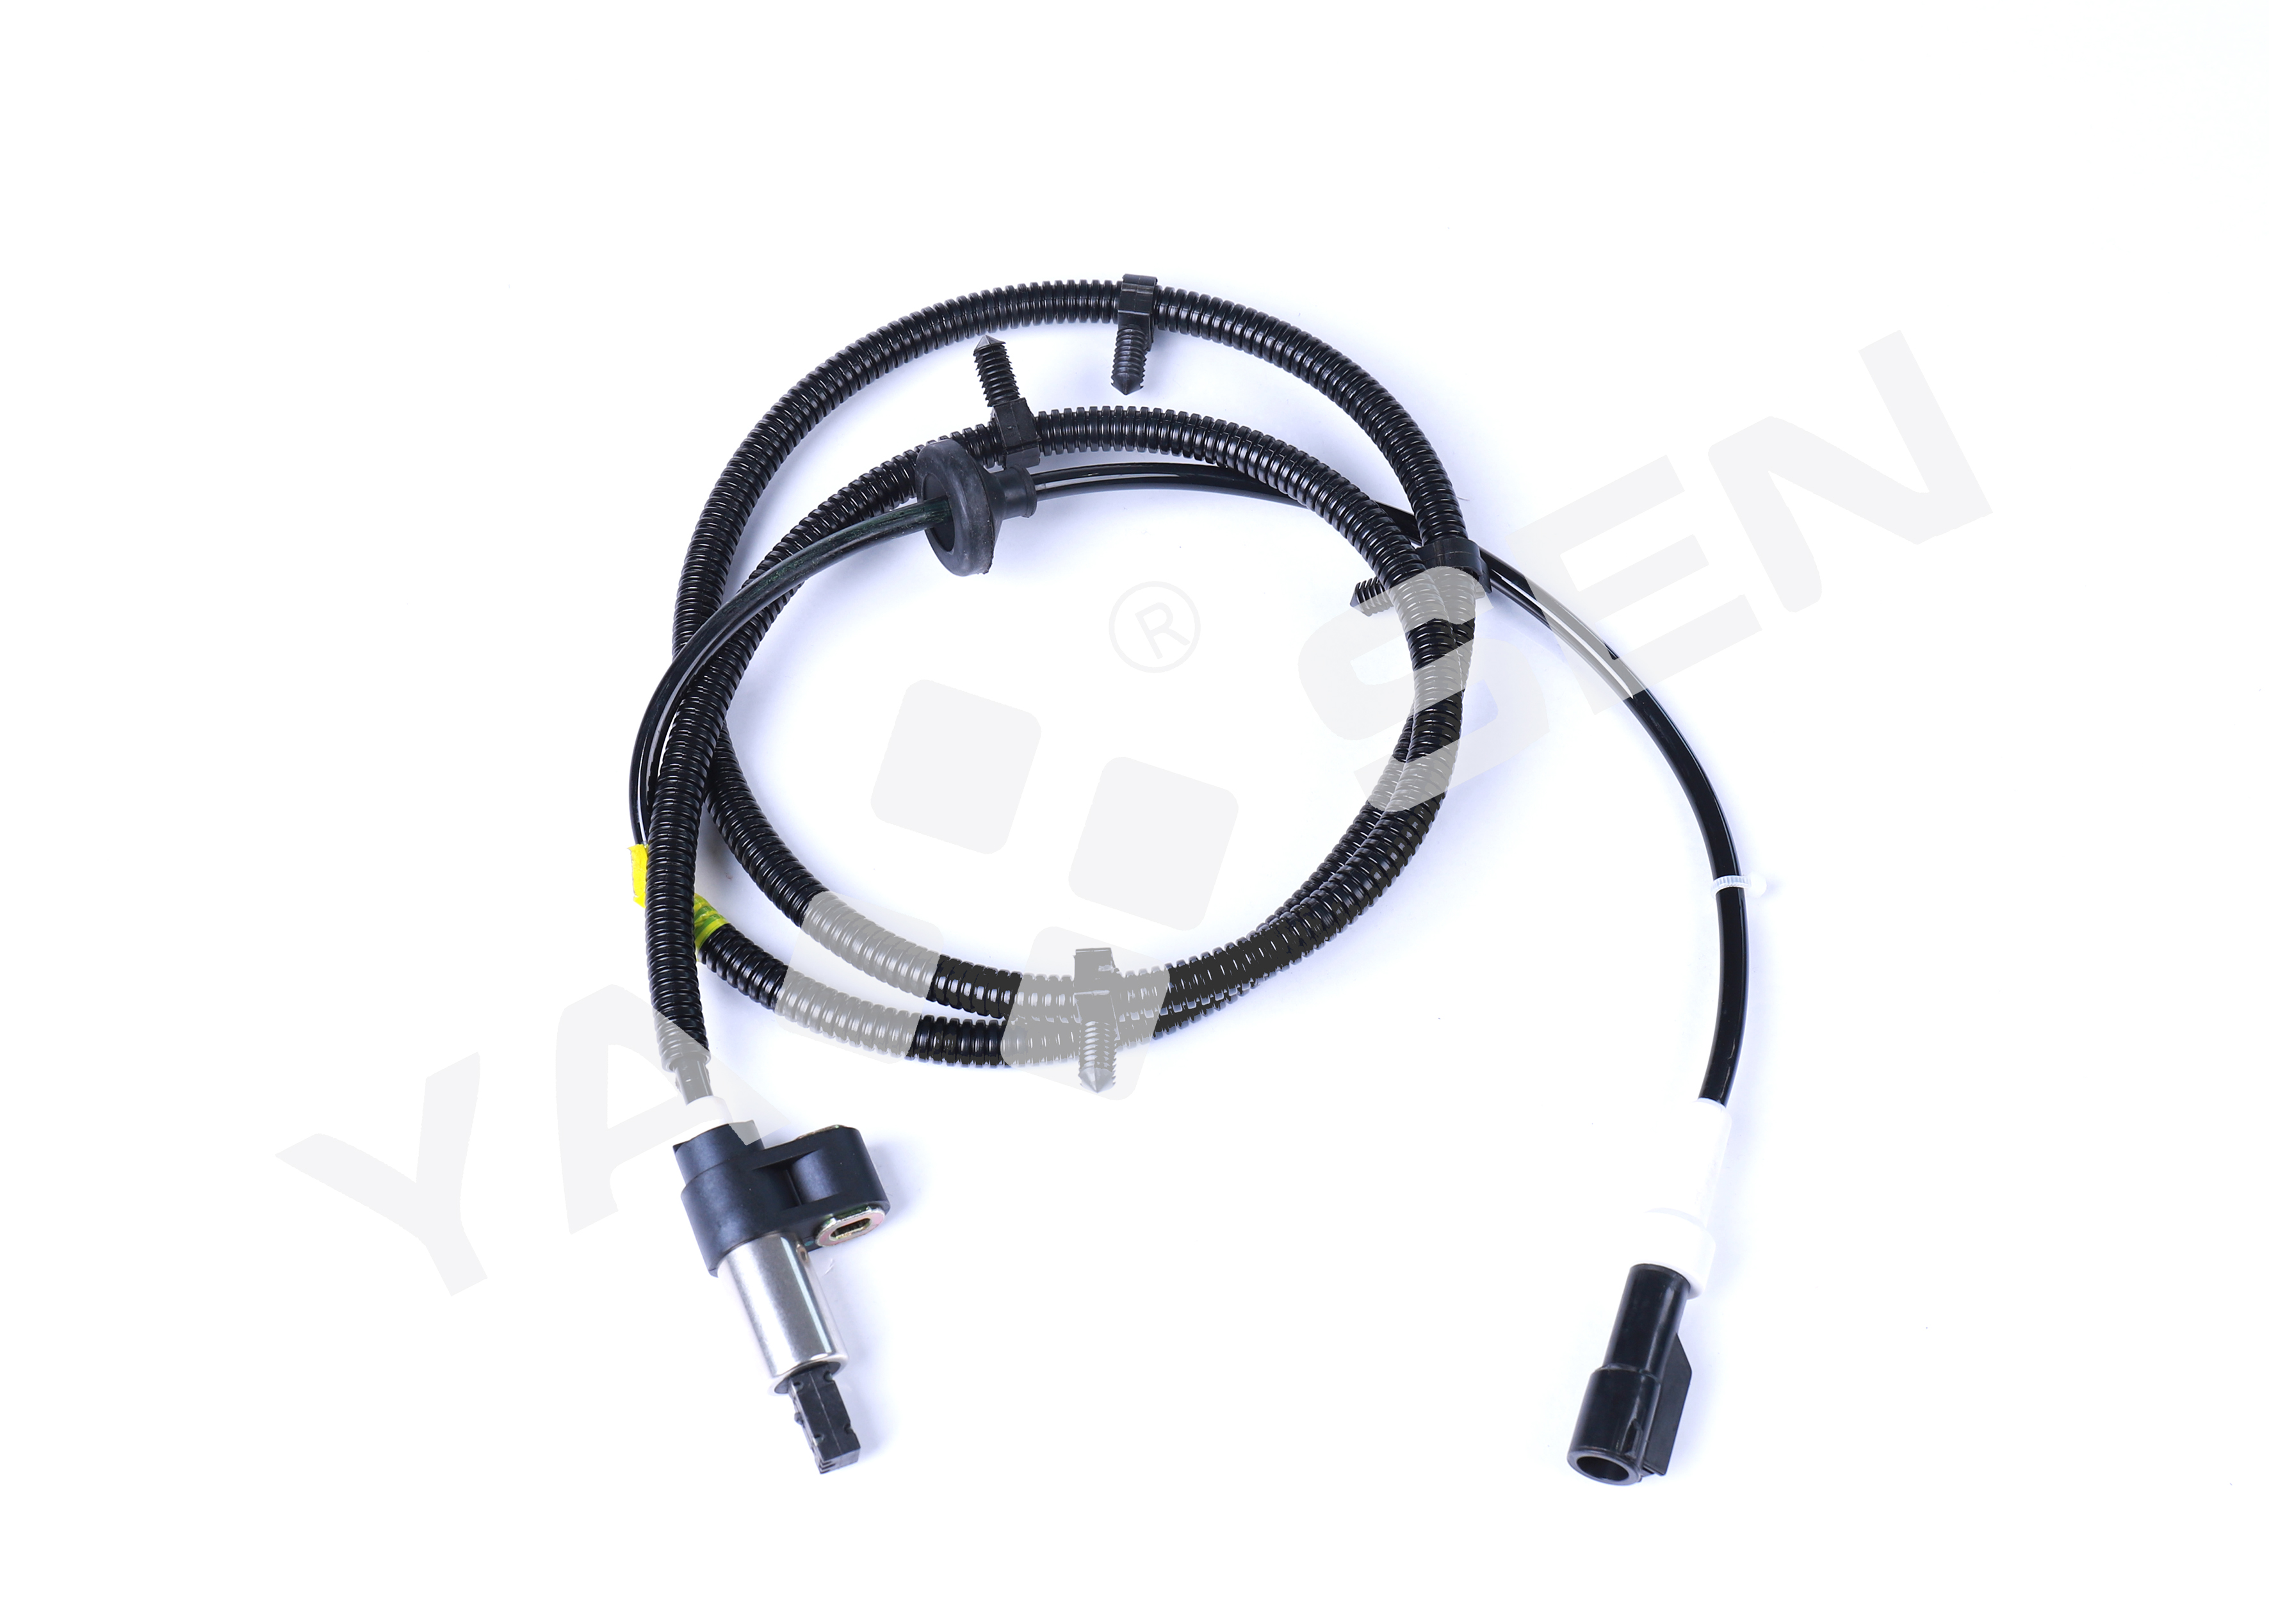 ABS Wheel Speed Sensor for FORD, F8AZ2C190AB ALS169 BRAB-74 SU7566 ABS280 970-240 72-5660 5S6033 1802-305230 970-240